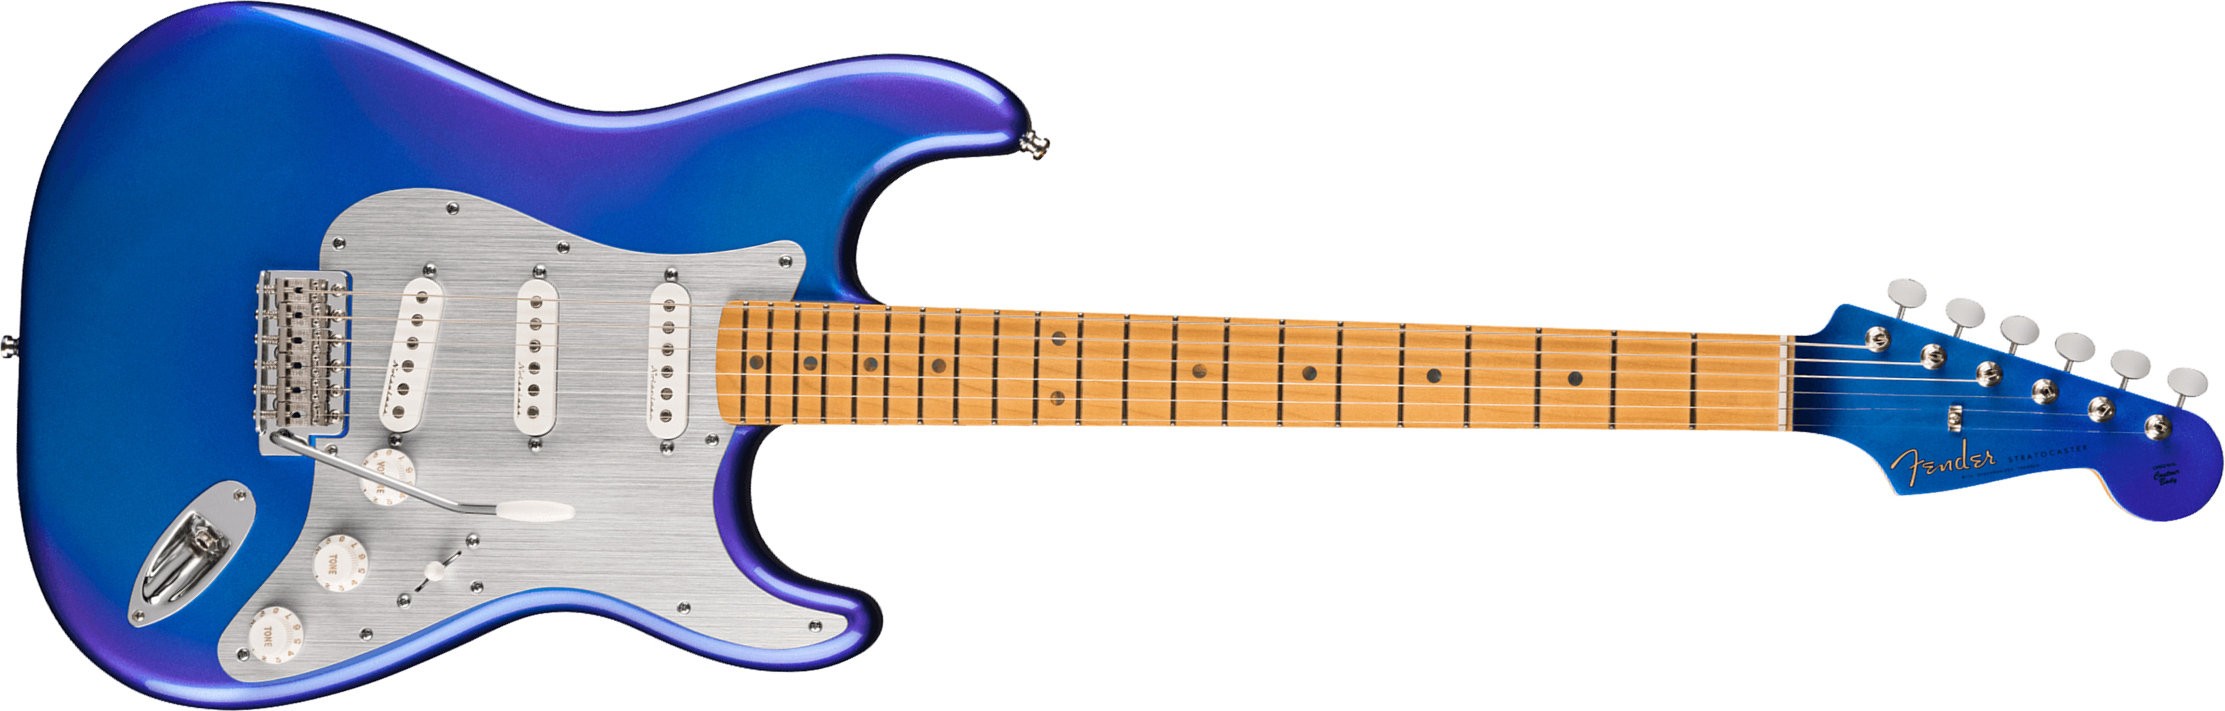 Fender H.e.r. Strat Ltd Signature Mex 3s Trem Mn - Blue Marlin - Guitarra eléctrica con forma de str. - Main picture